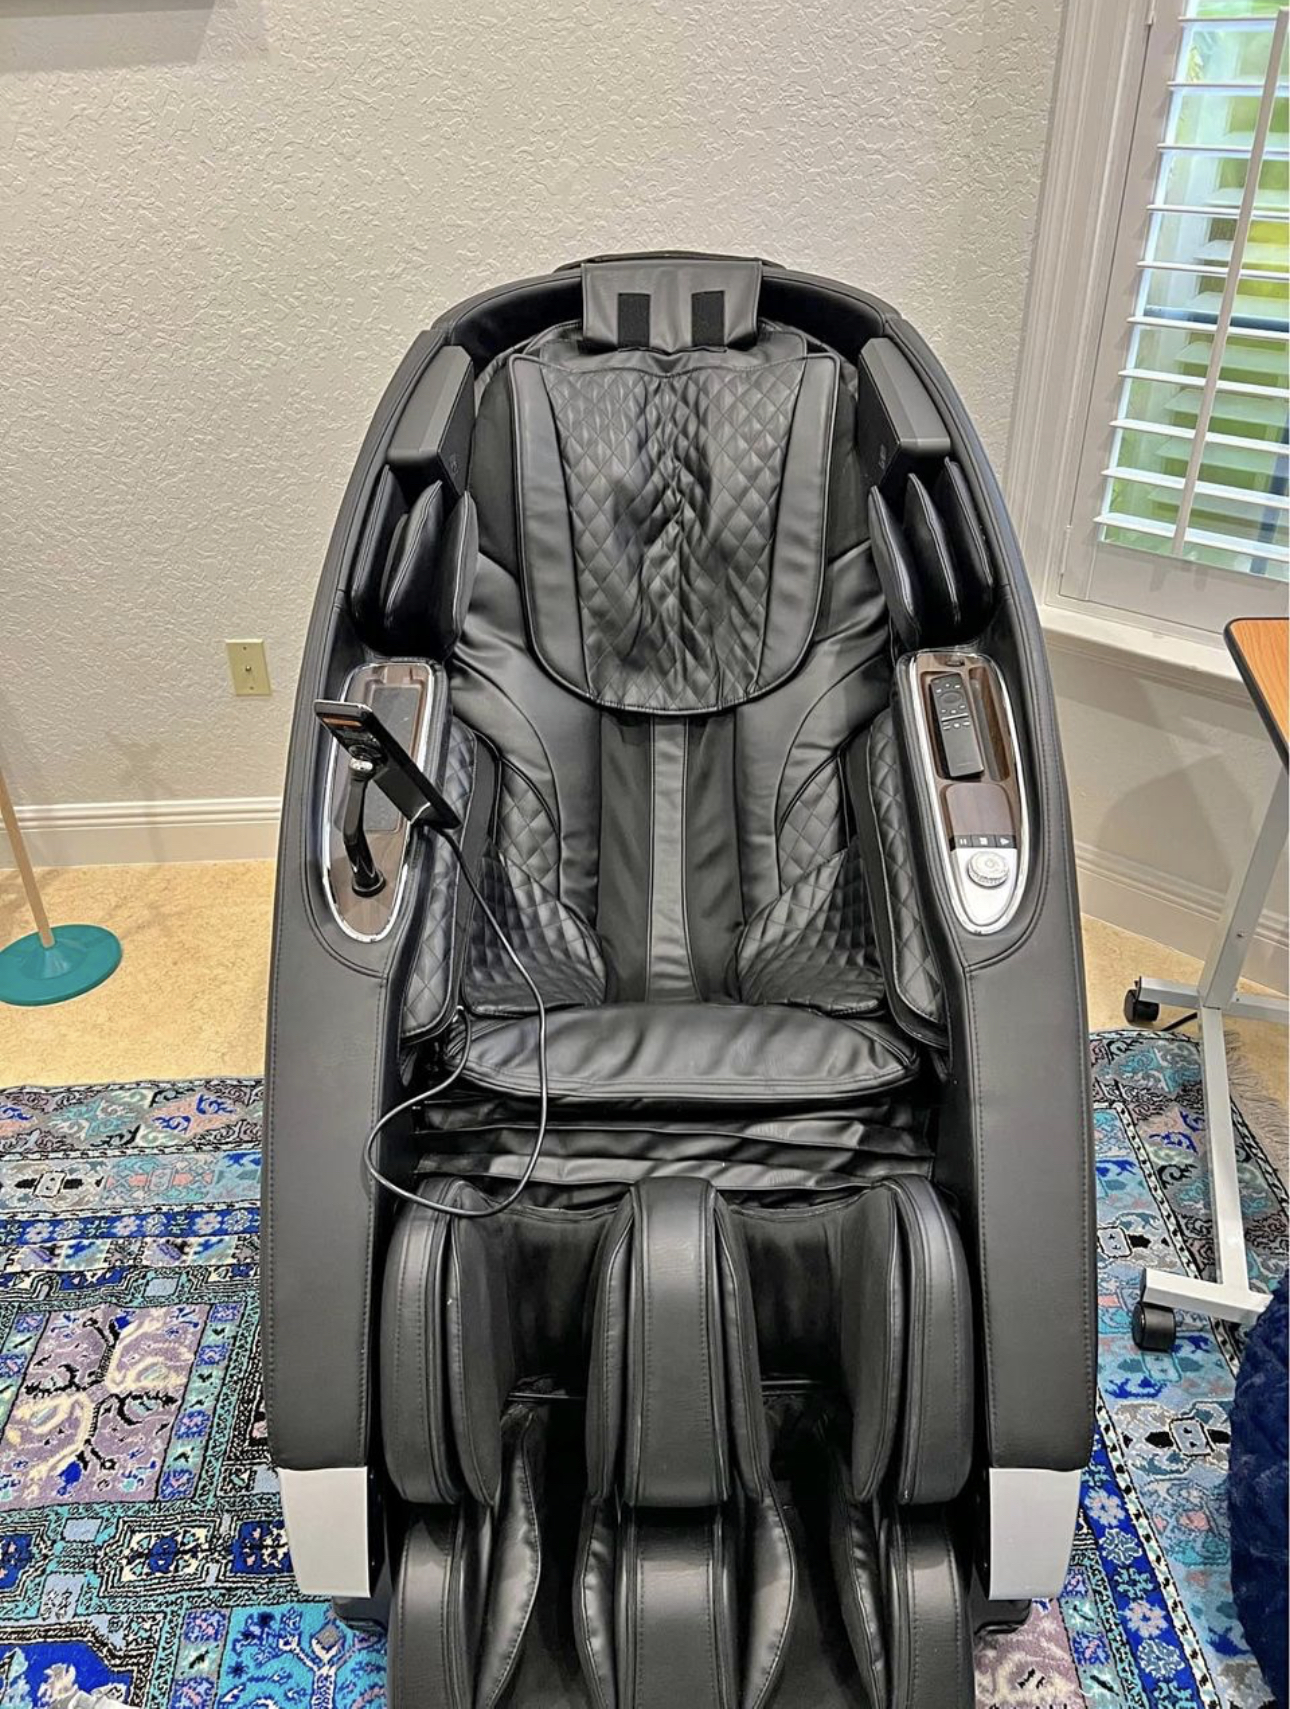 Super Novo 2.0 Massage Chair - Human Touch®